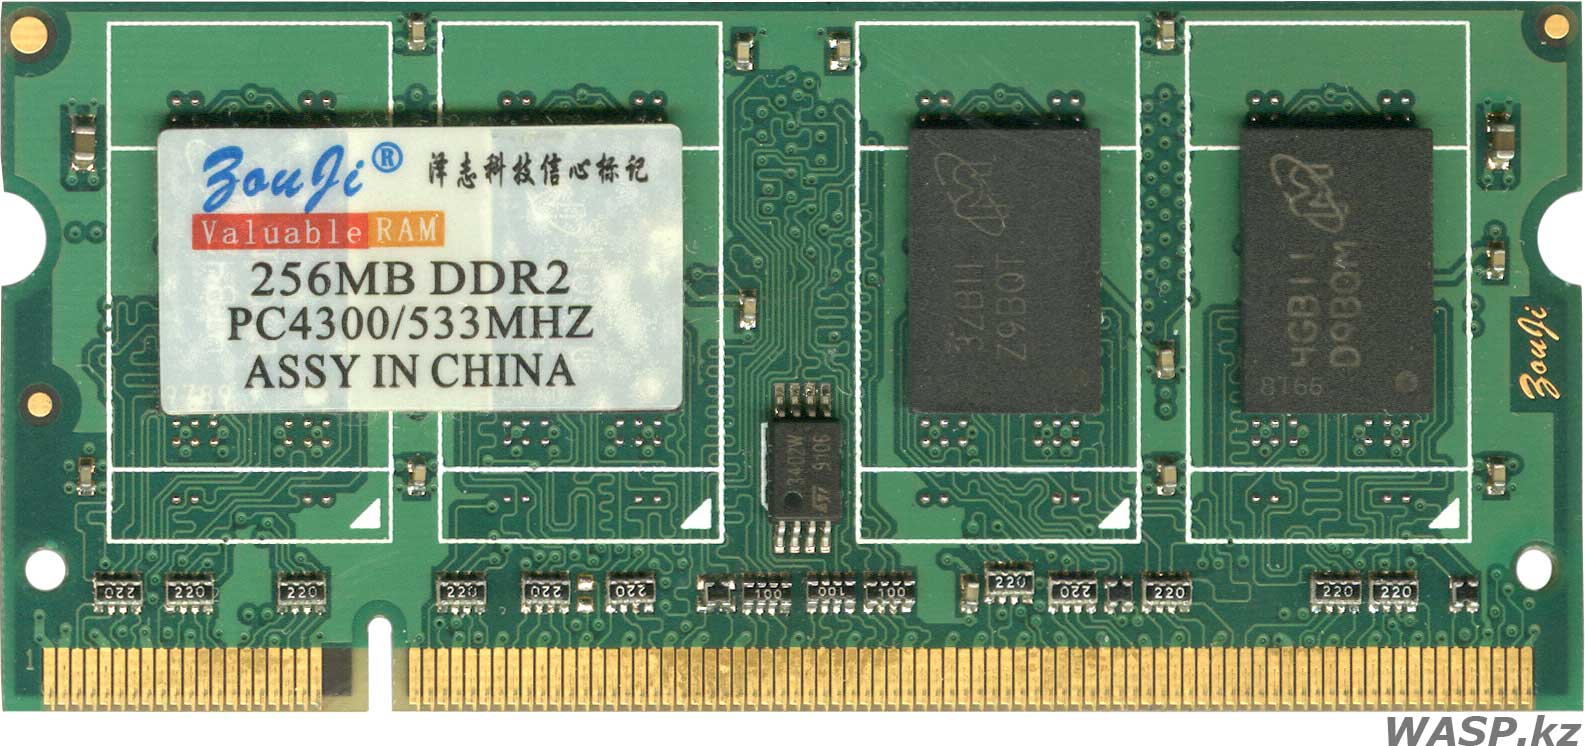 ZouJi 256MB DDR2 PC4300/533NHZ обзор оперативной памяти SO-DIMM